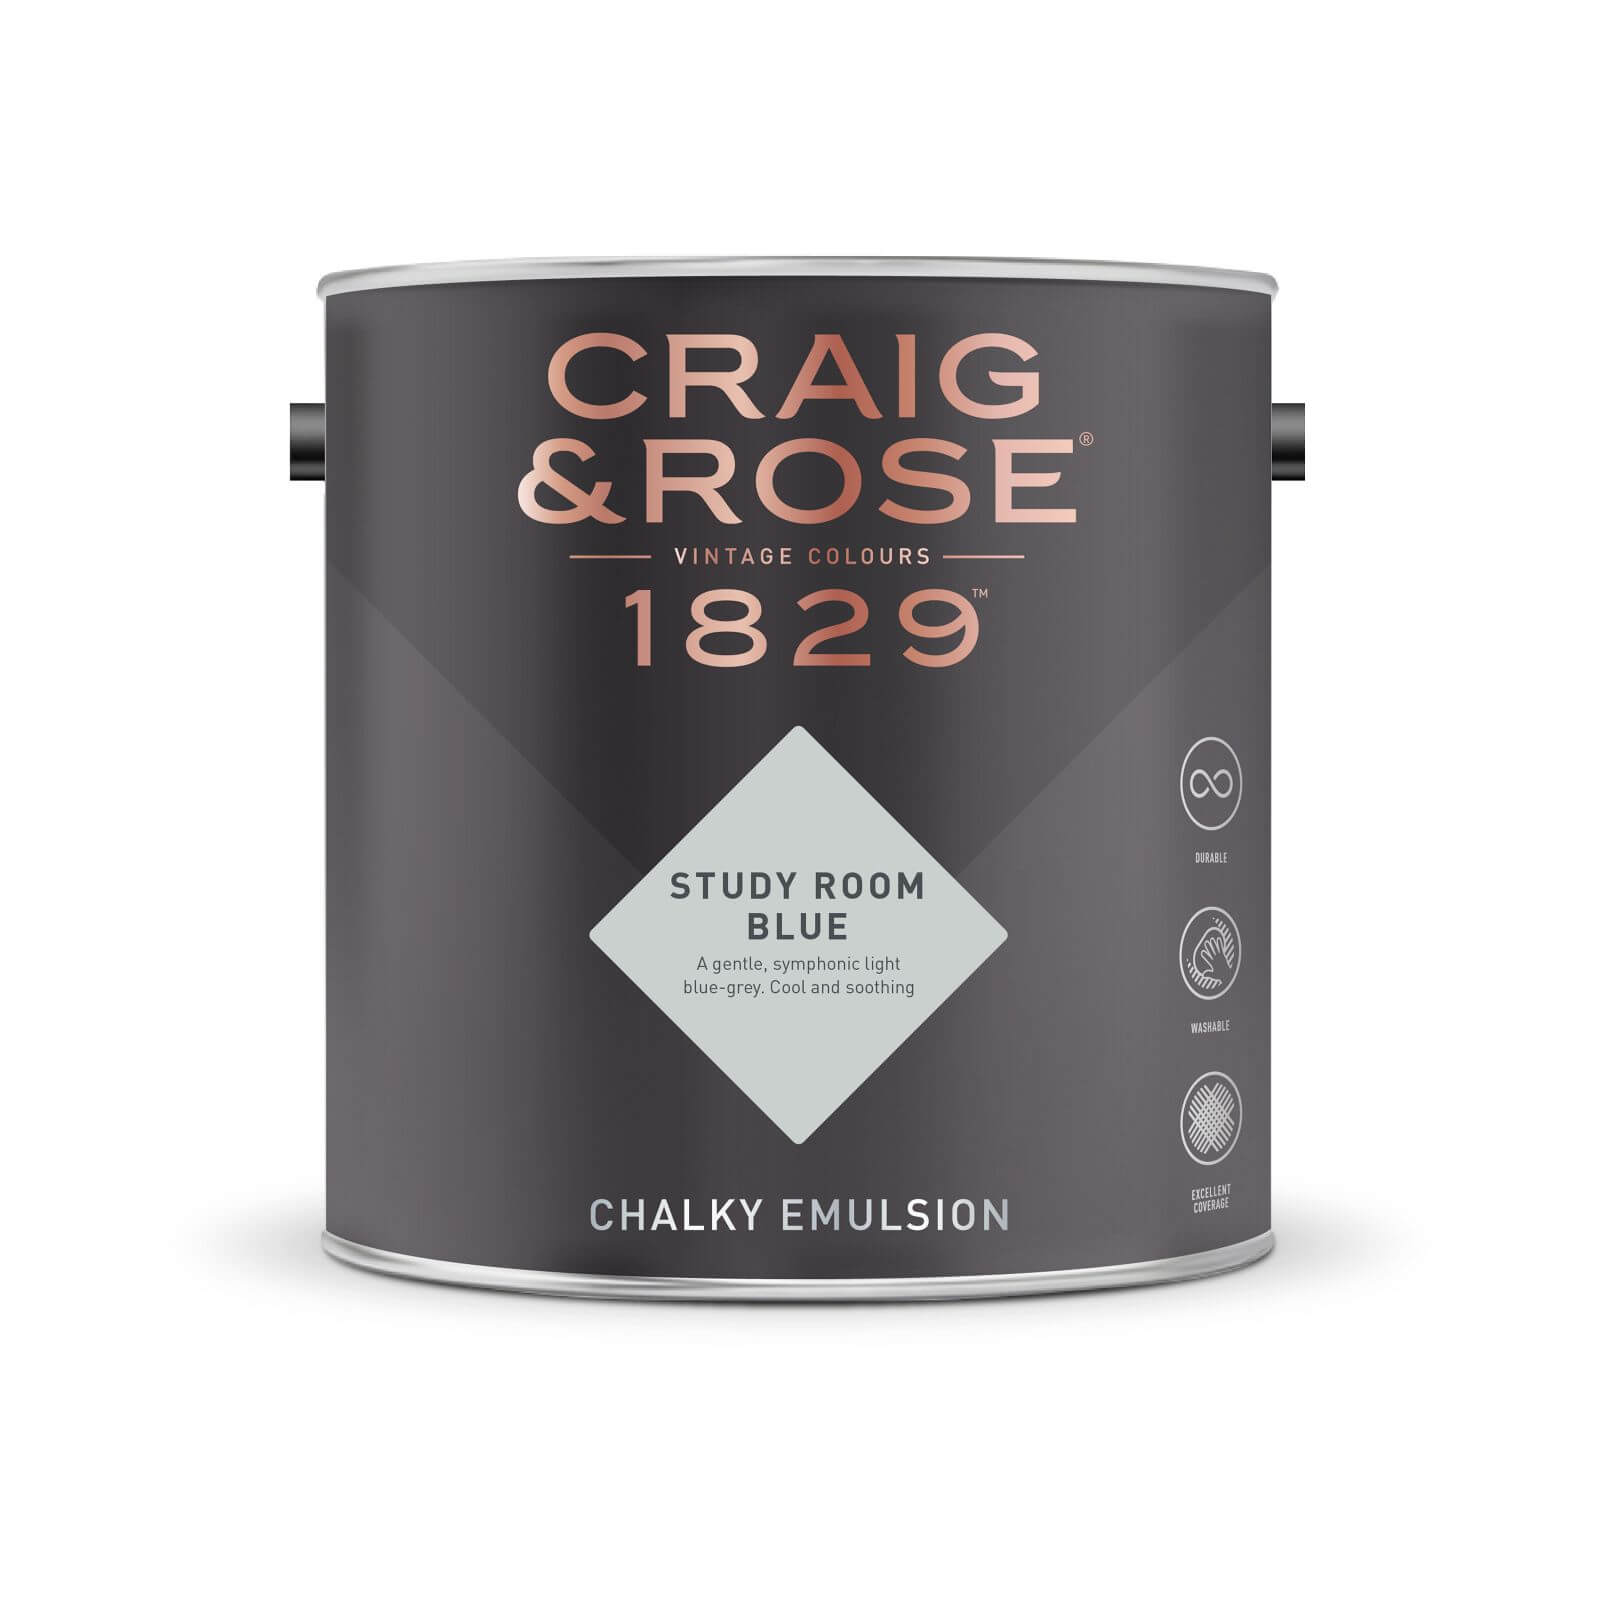 Craig & Rose 1829 Chalky Emulsion Paint Study Room Blue - 5L